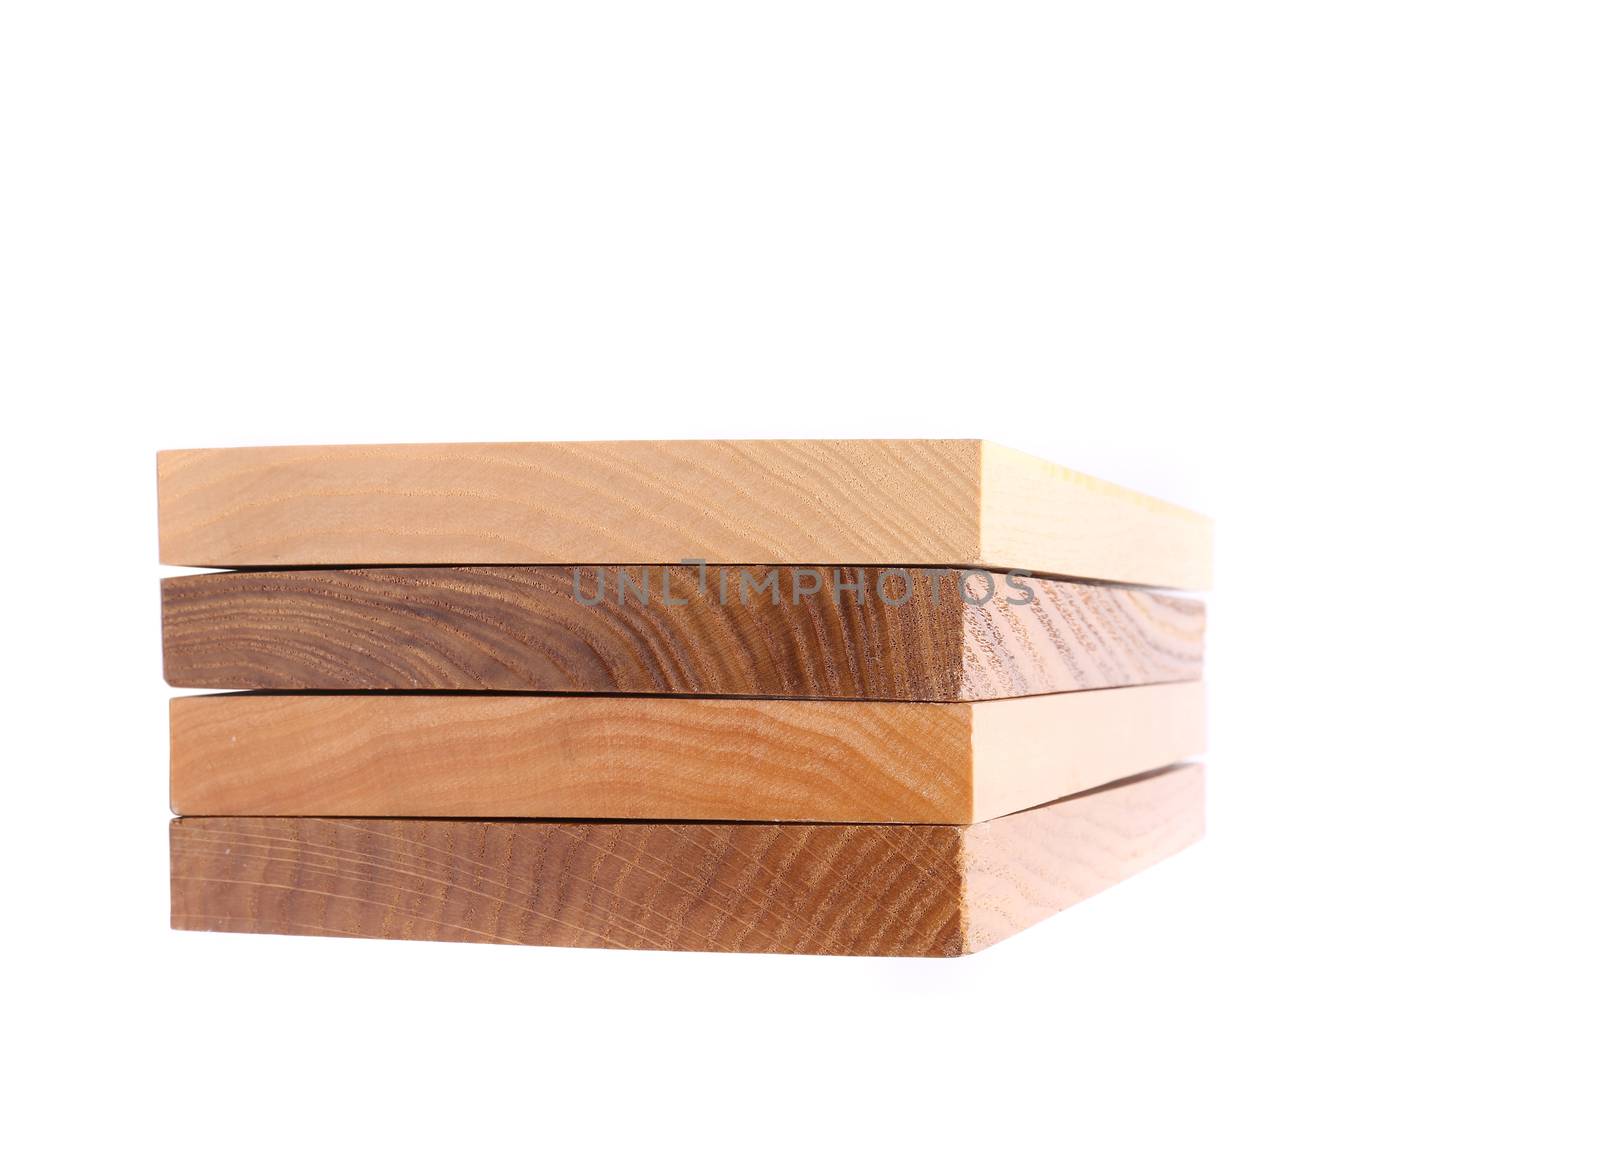 Four horizontal boards (elm, acacia, lime, oak) by indigolotos